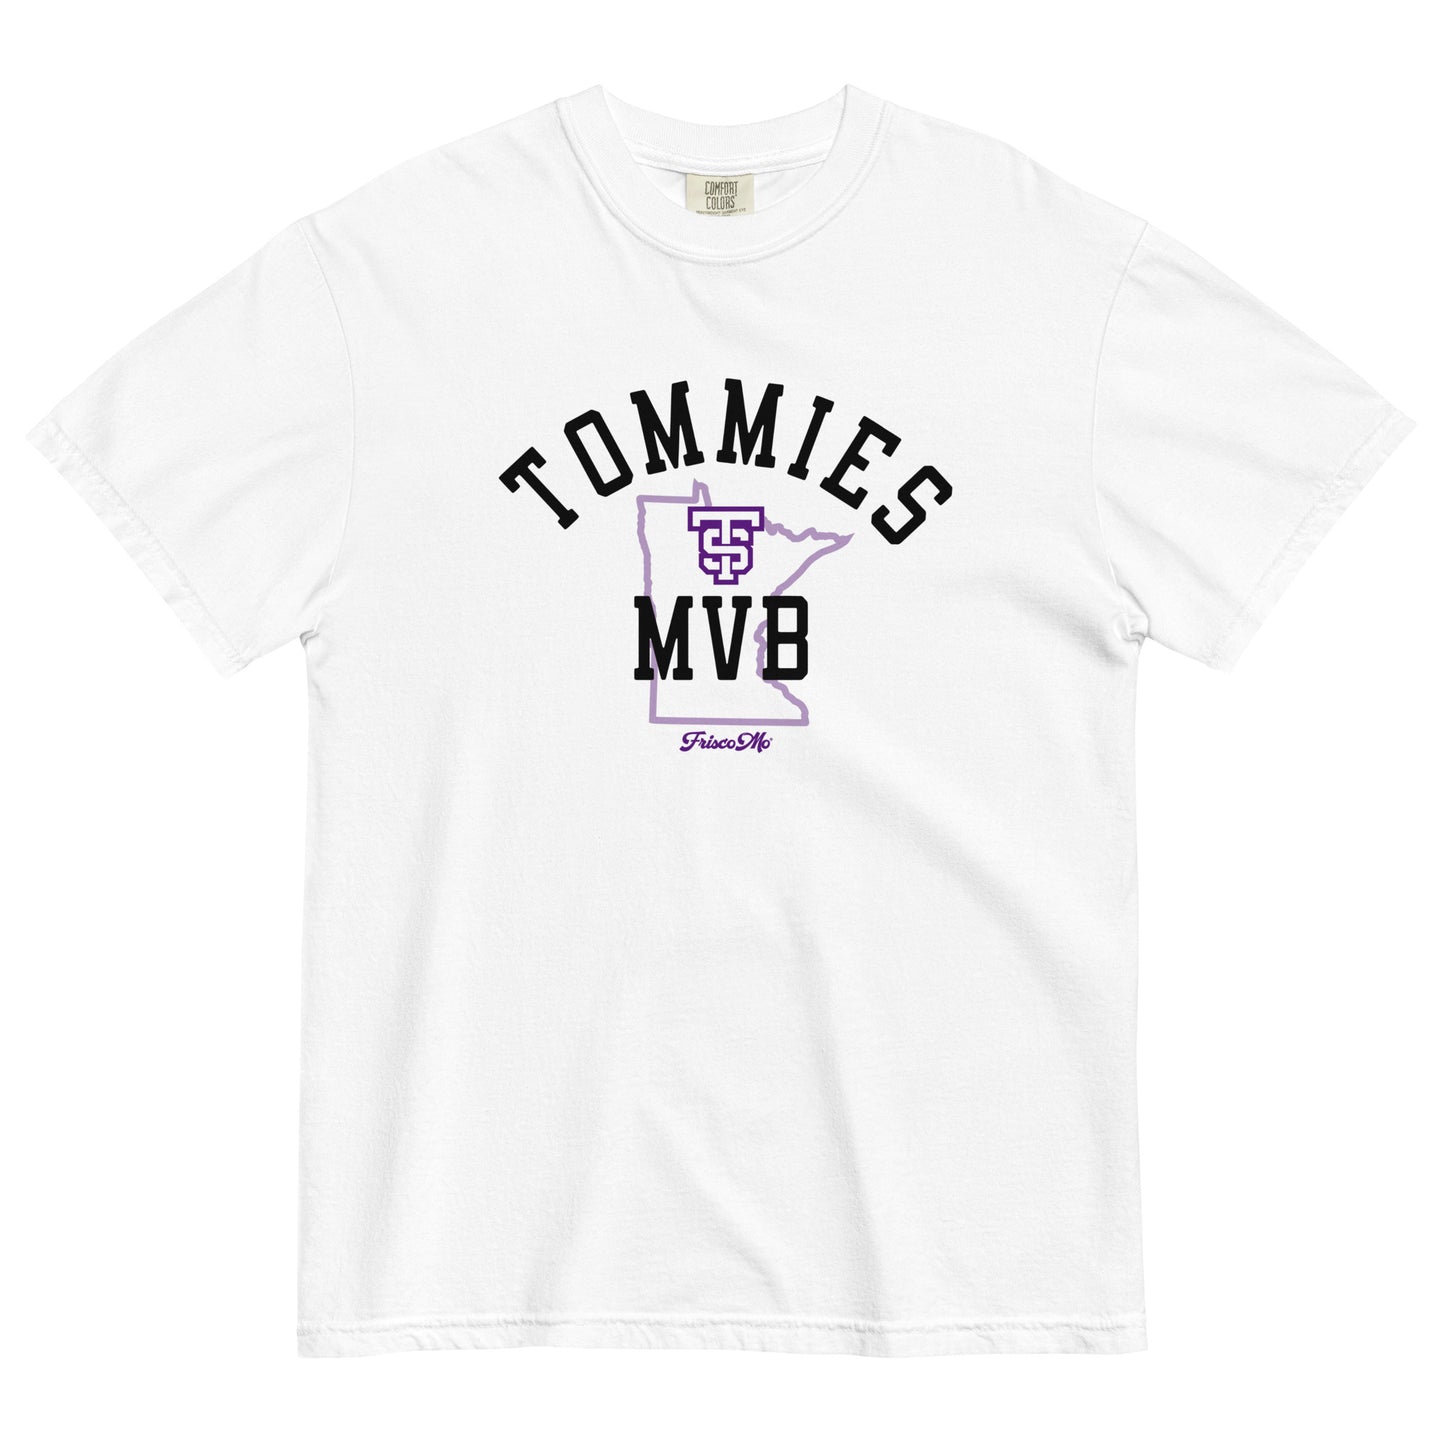 Tommies MVB Garment-Dyed Heavyweight Tee